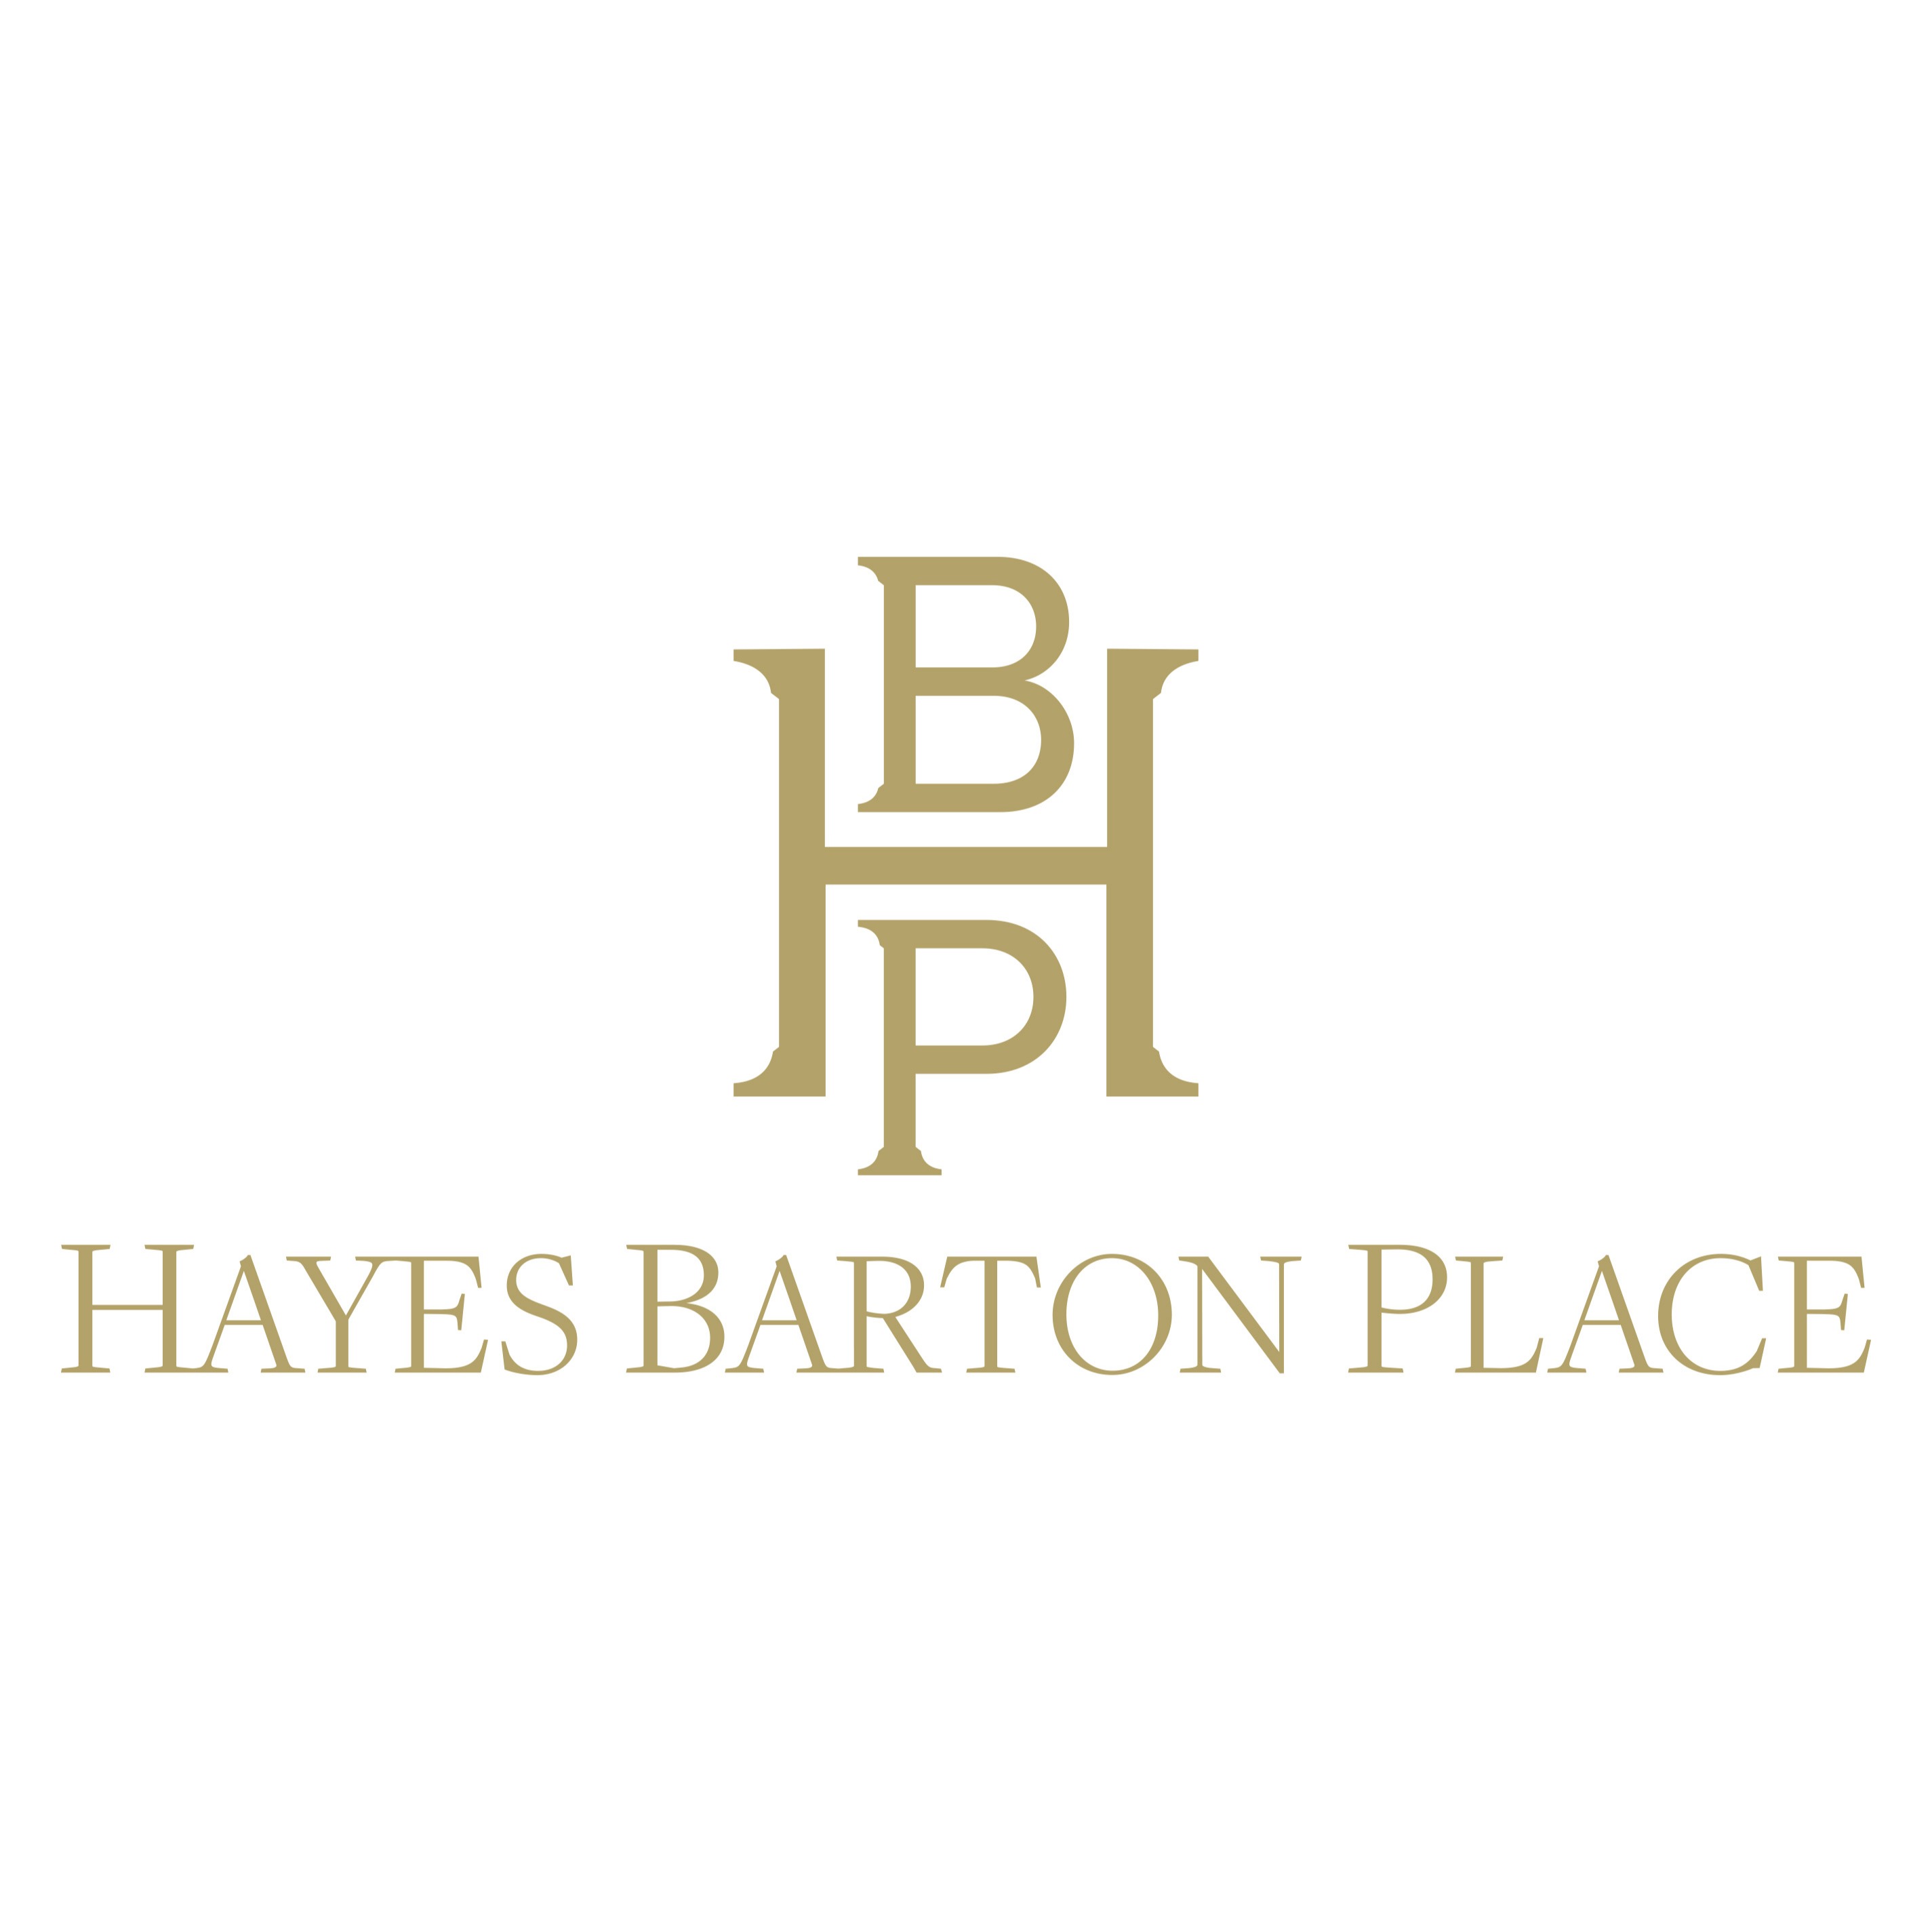 Hayes Barton Place - Neighborhood Design Center Raleigh (919)803-6734